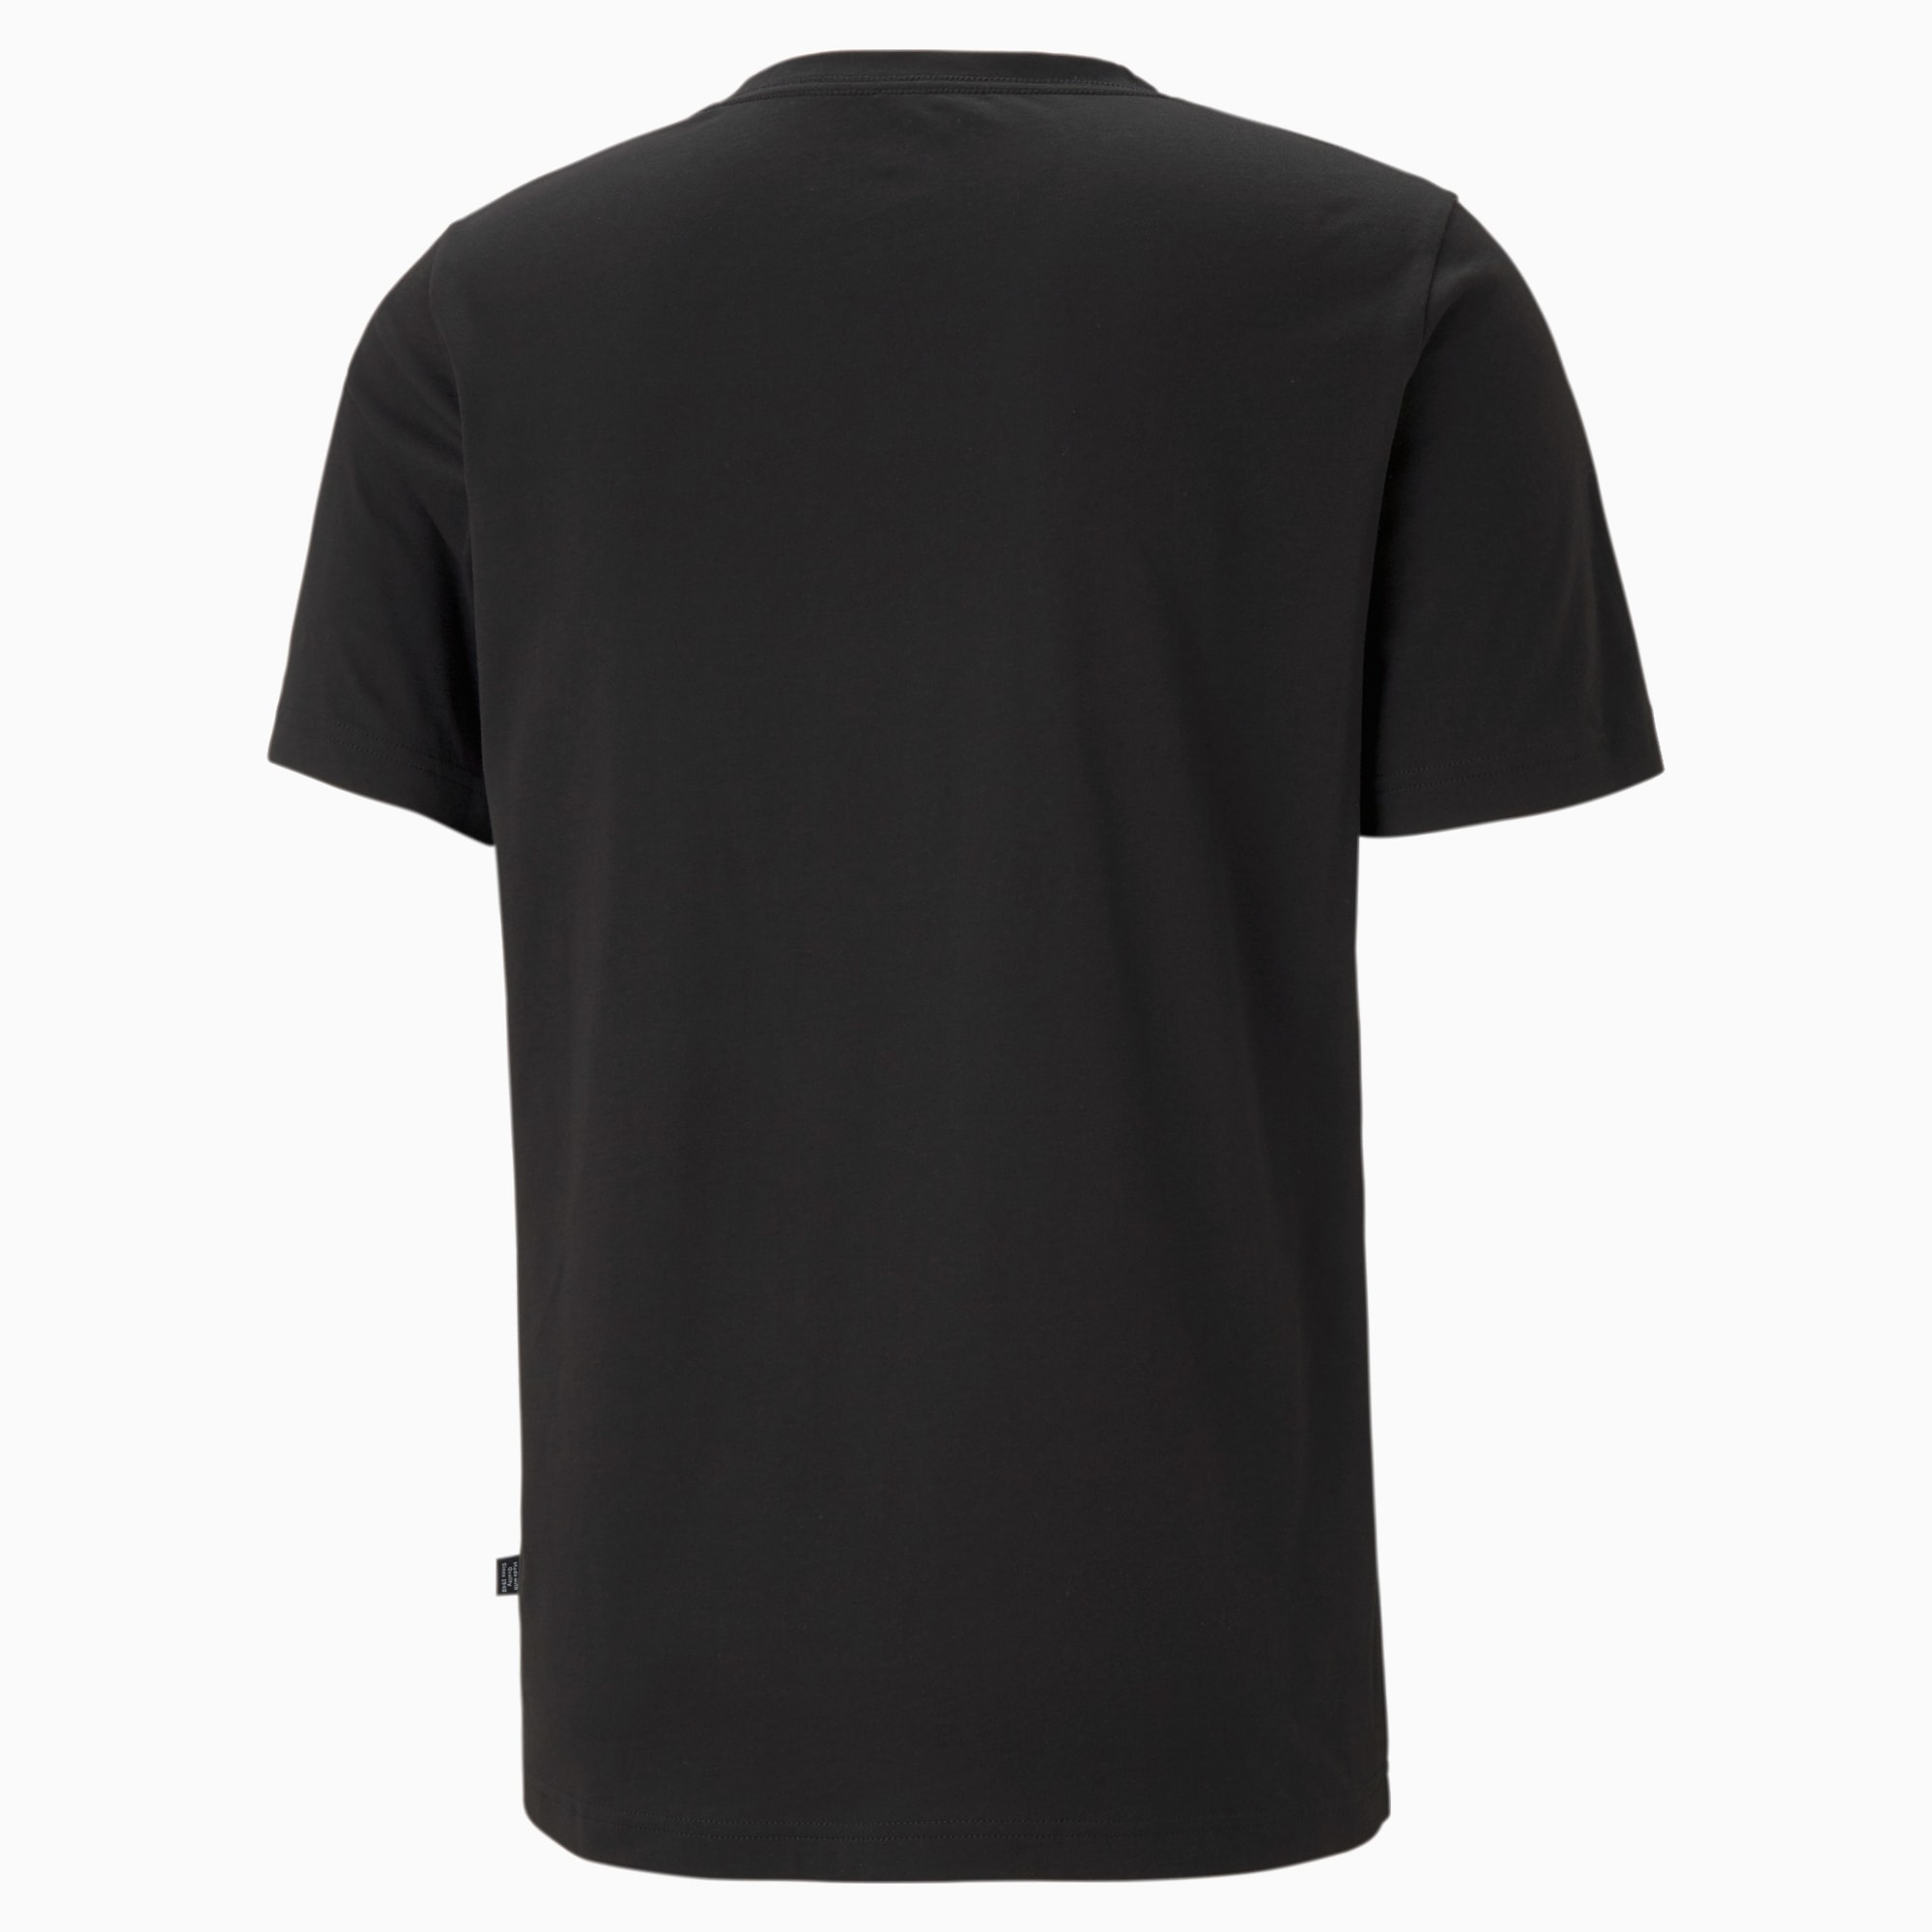 PUMA Essentials V-Neck T-Shirt Men, Black, Size 6XL, Clothing